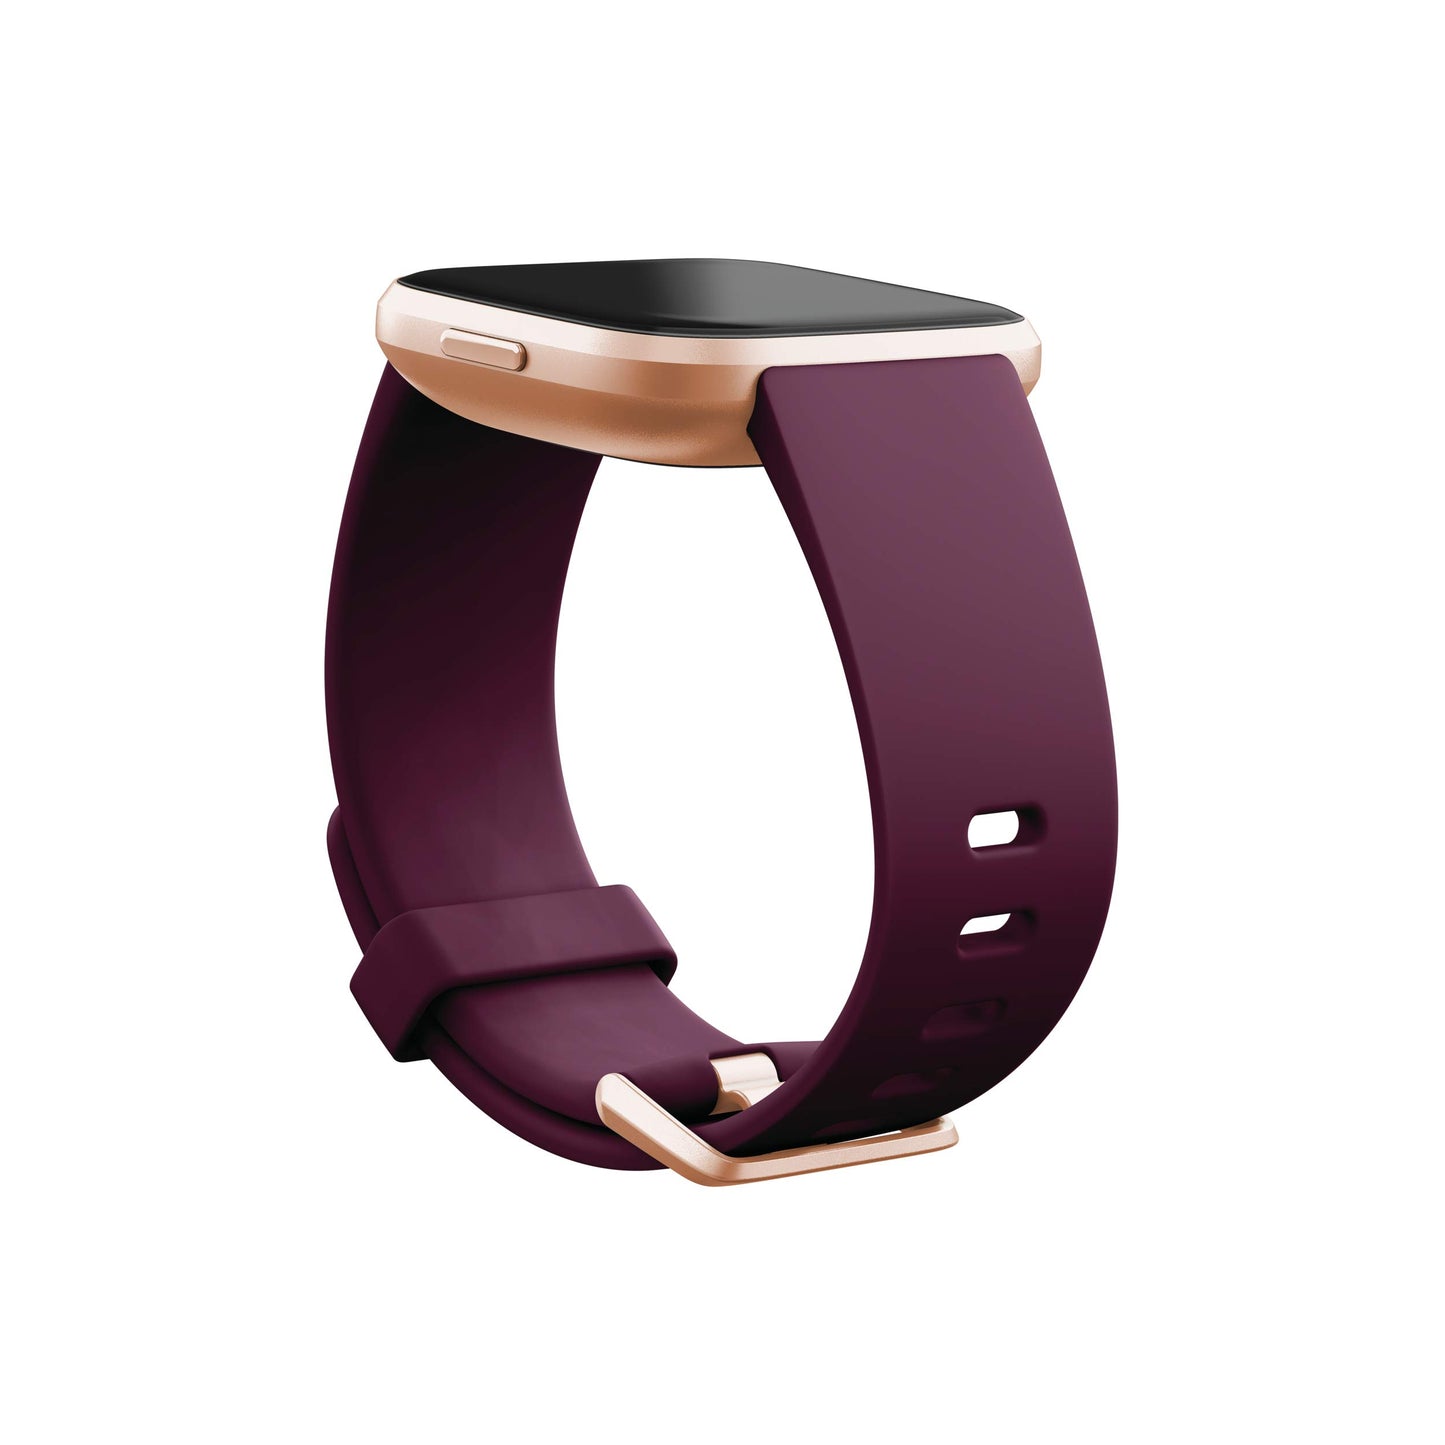 Fitbit Versa 2 Special Edition Health & Fitness Smartwatch w/Bluetooth, Music, Notifications, Alexa, Water-Resistant (Smoke Woven/Mist Grey)